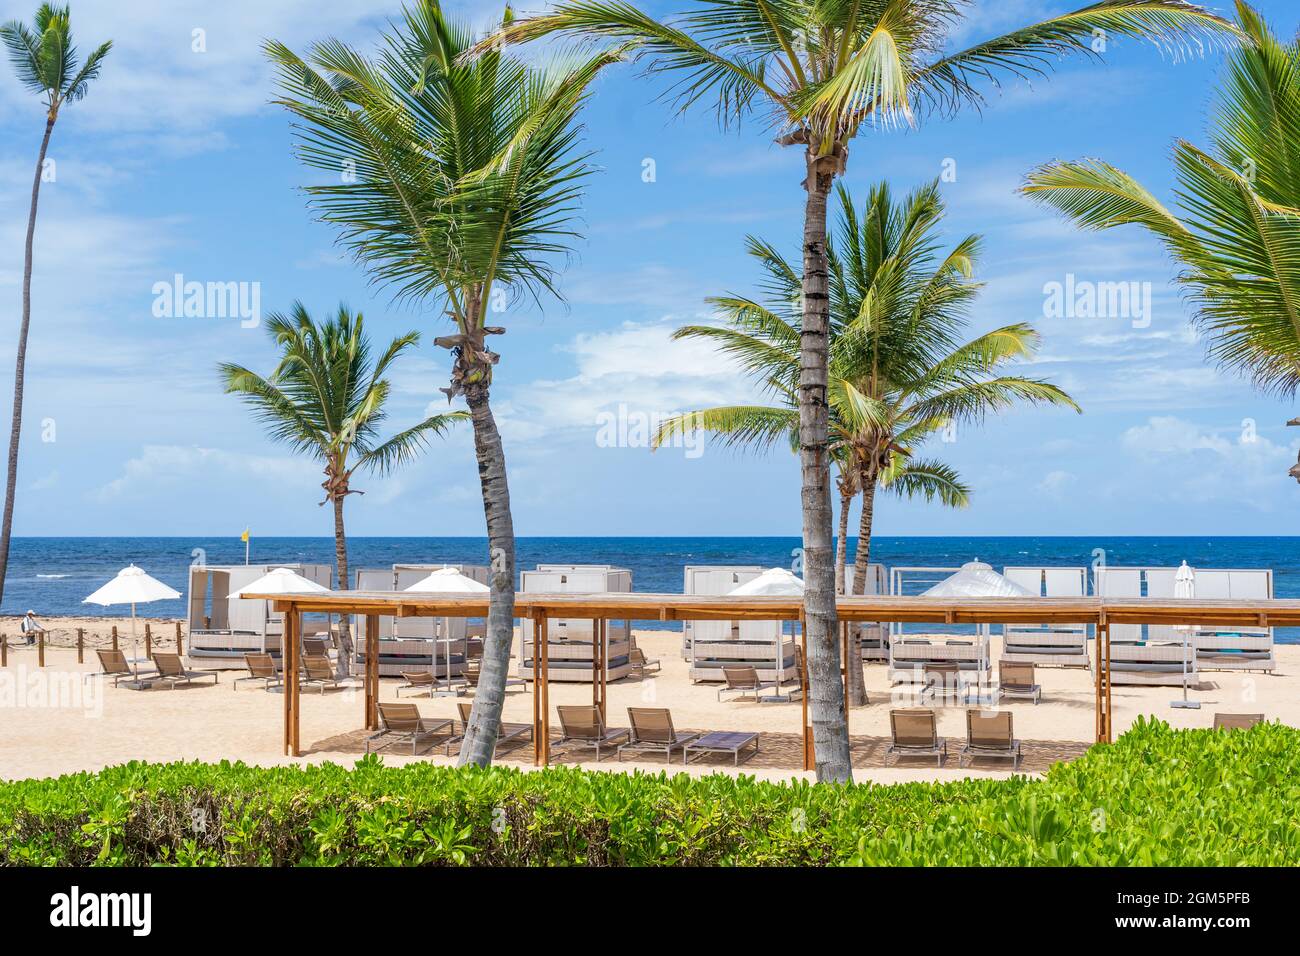 Idyllic Beach in the Dominican Republic. Stock Photo